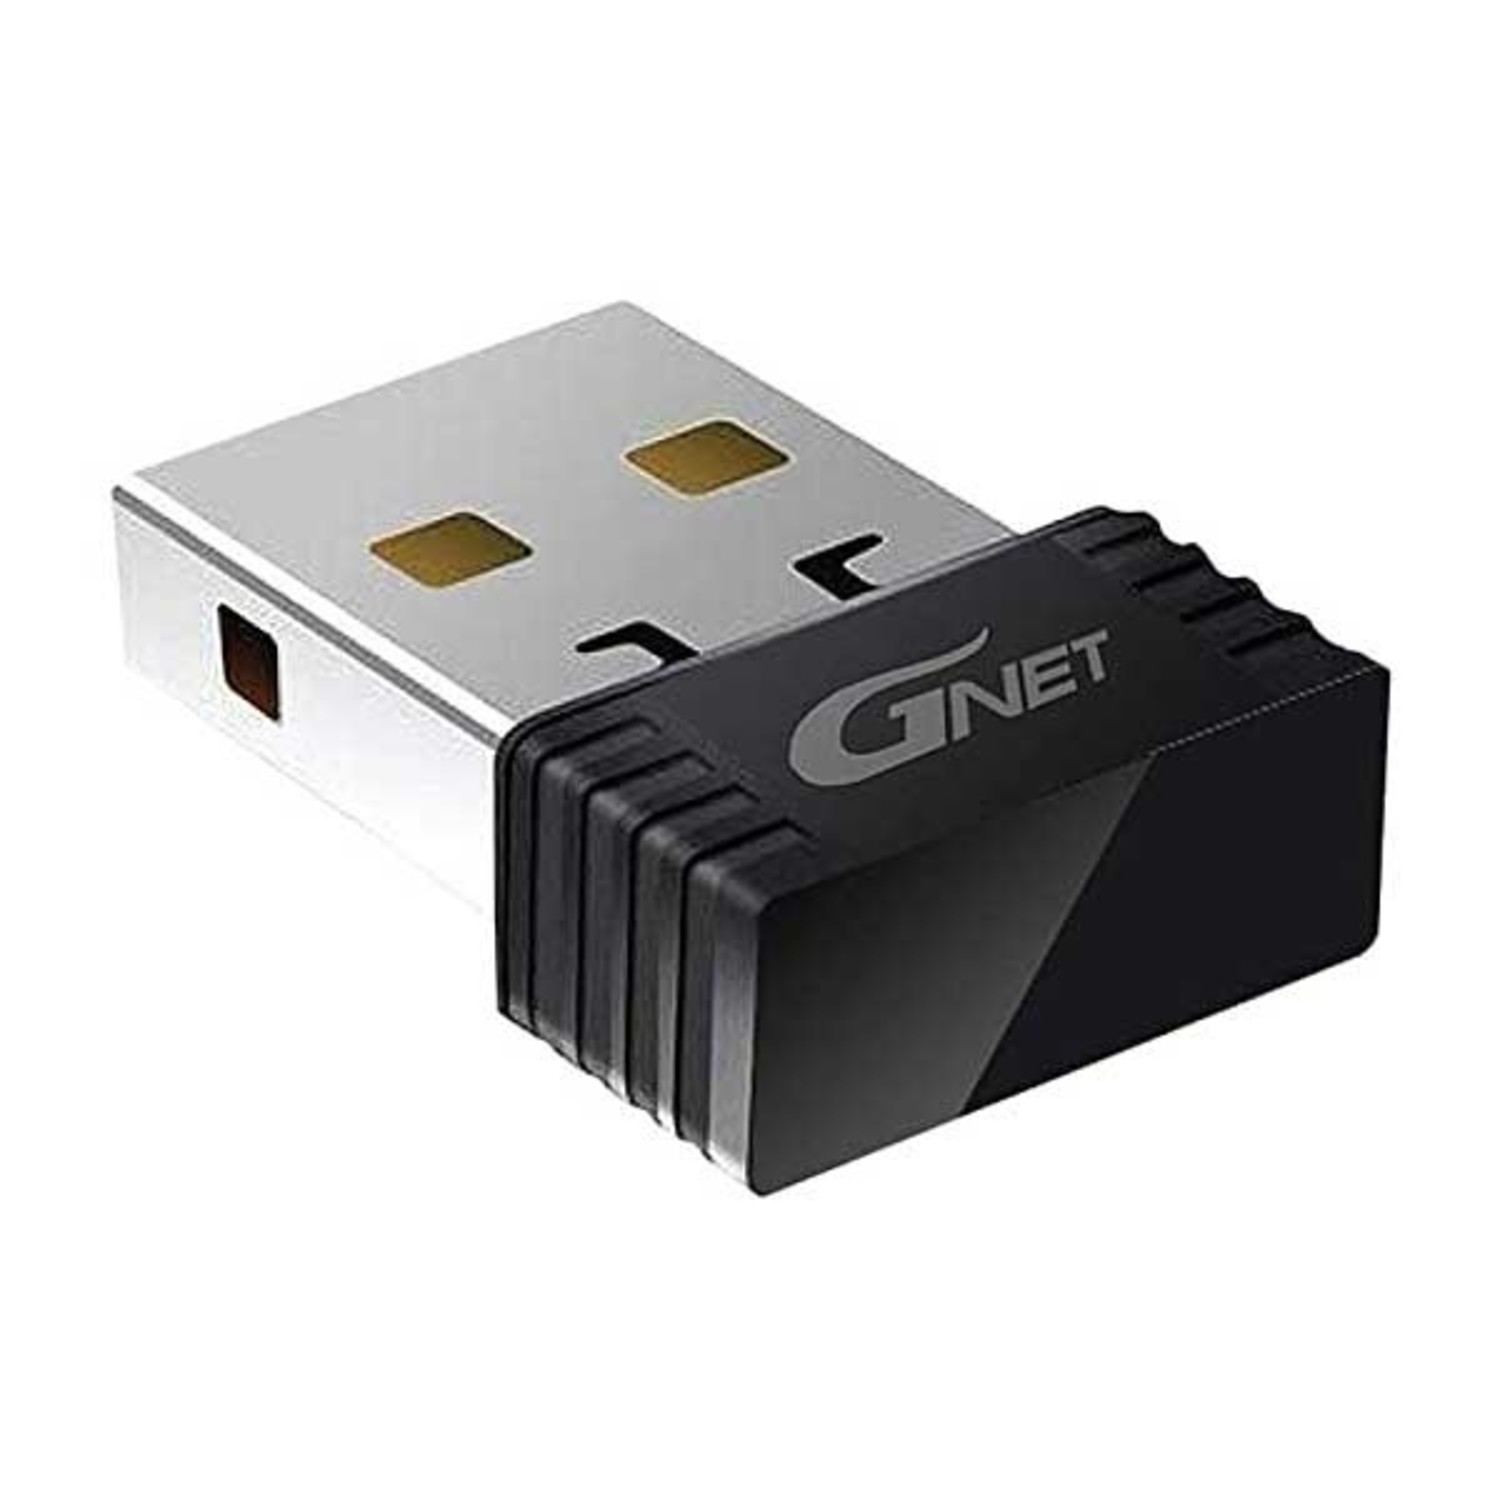 grens Streng Kleverig Gnet USB Wifi adapter - Dashcamdeal | Europe's dashcam store